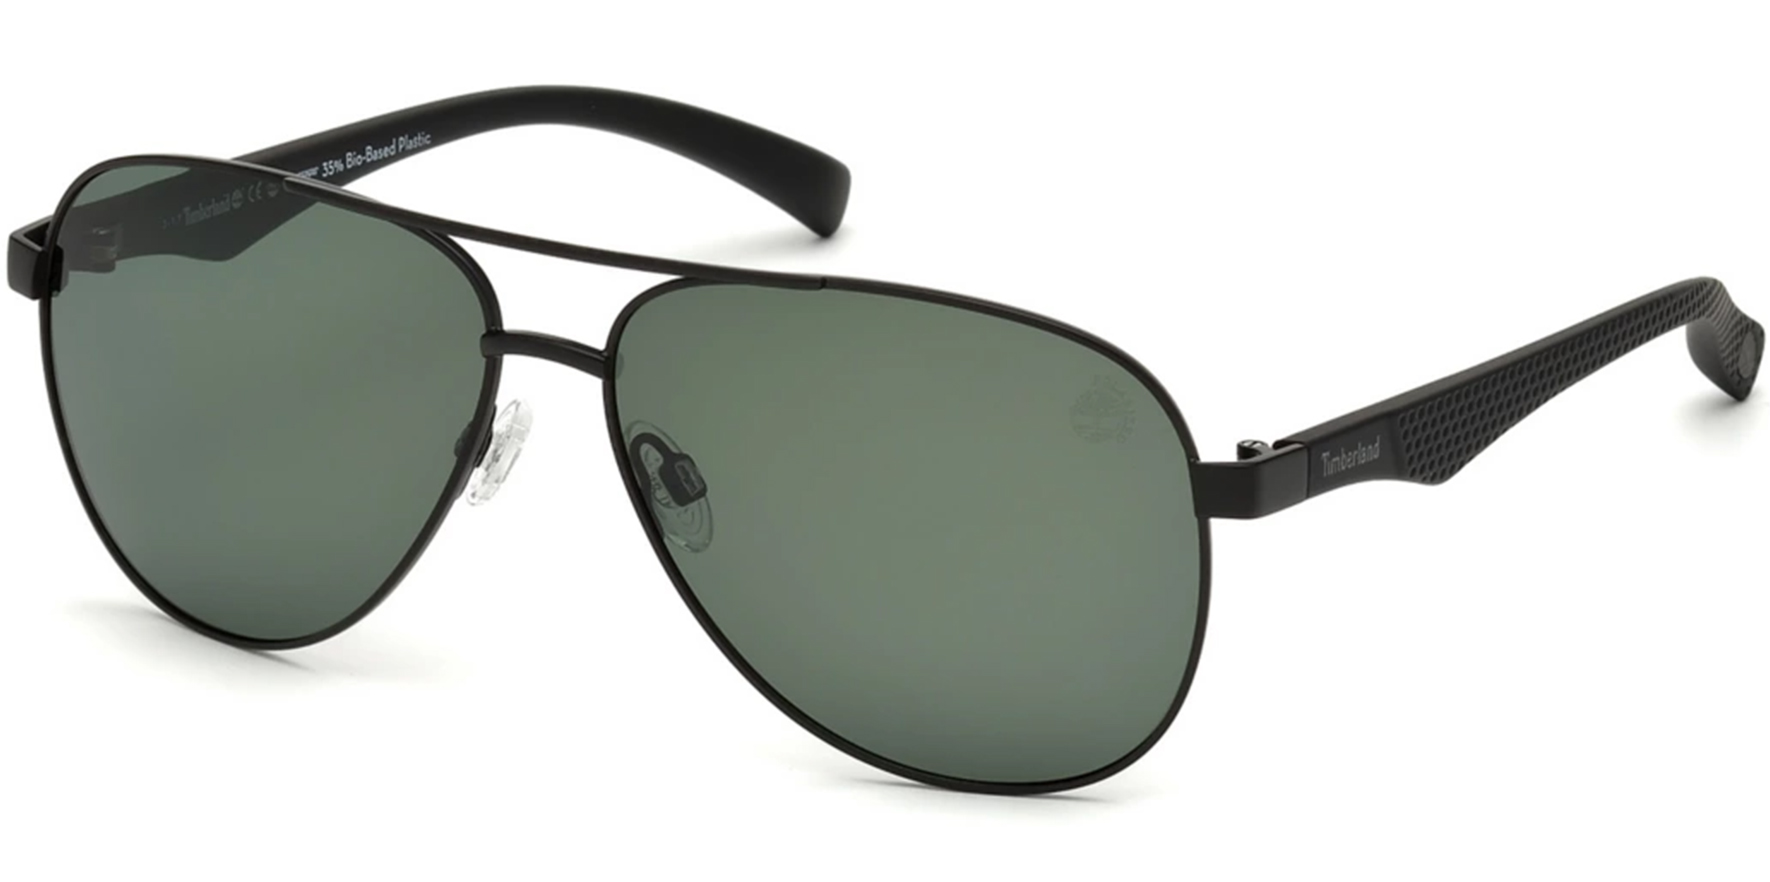 Timberland Men's Polarized Sunglasses (various styles)